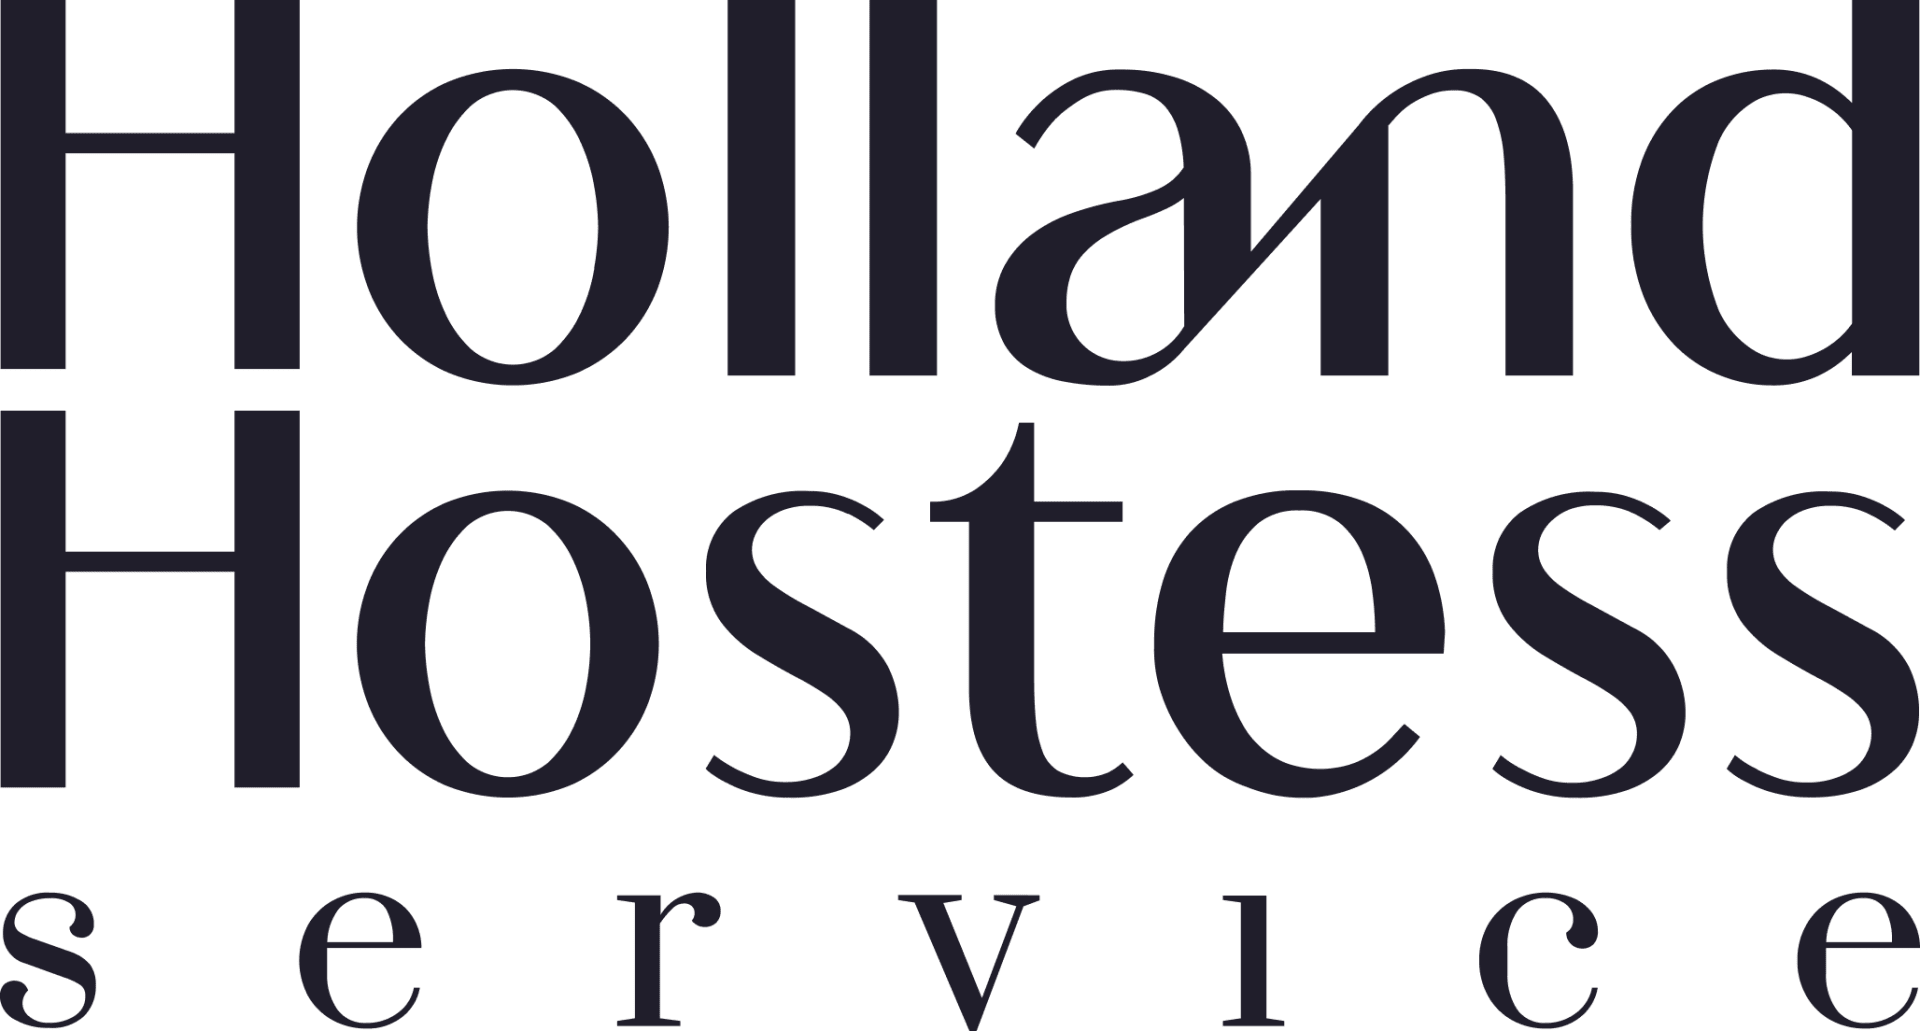 Holland Hostess Service Logo (2021)